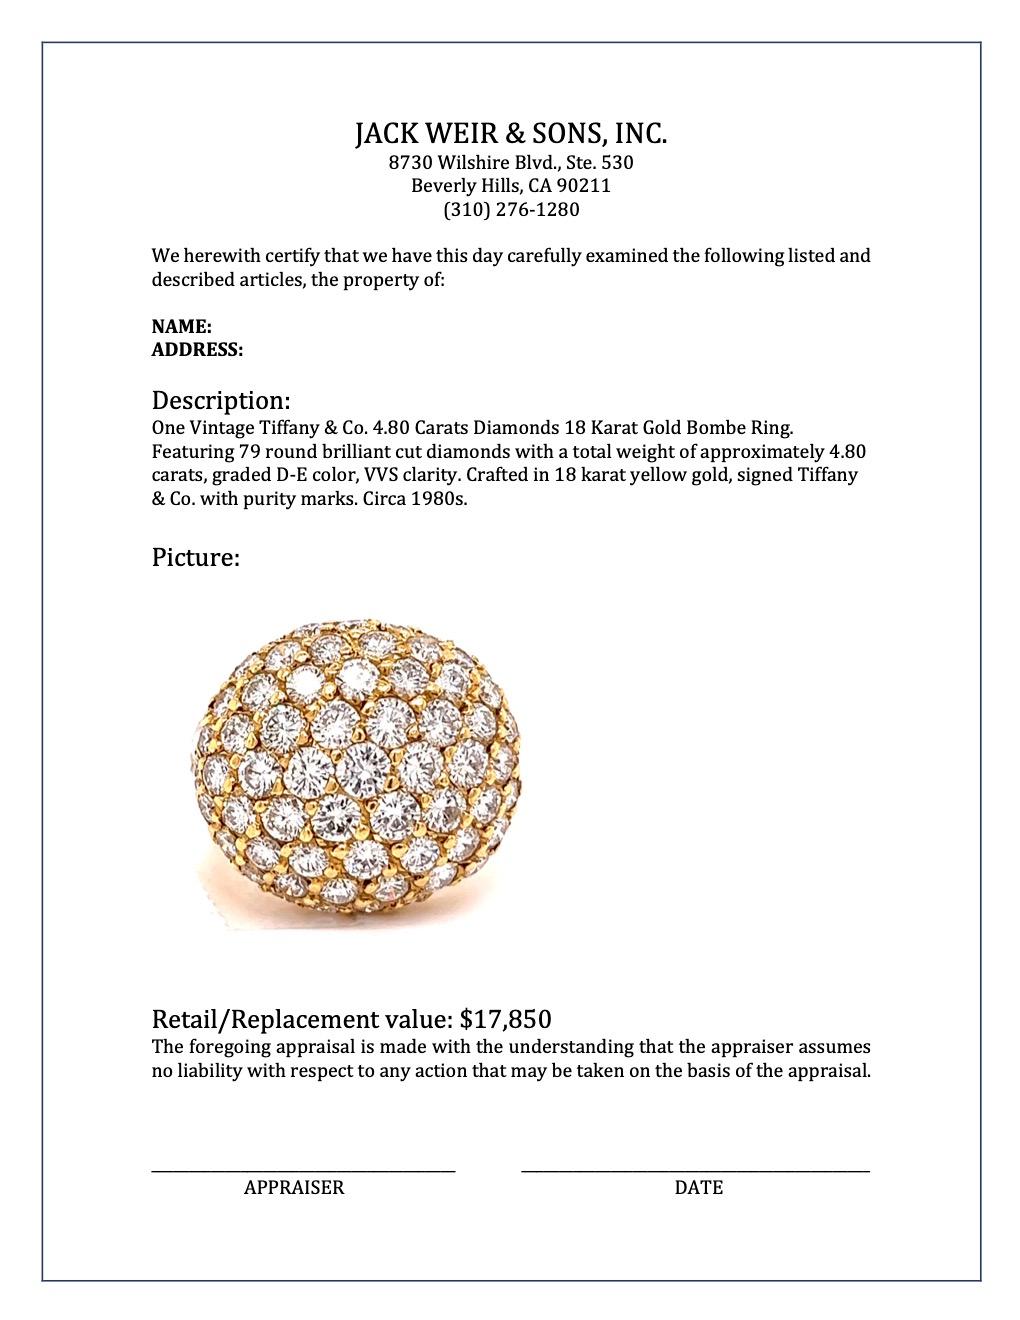 Vintage Tiffany & Co. 4.80 Carats Diamonds 18 Karat Gold Bombe Ring 2